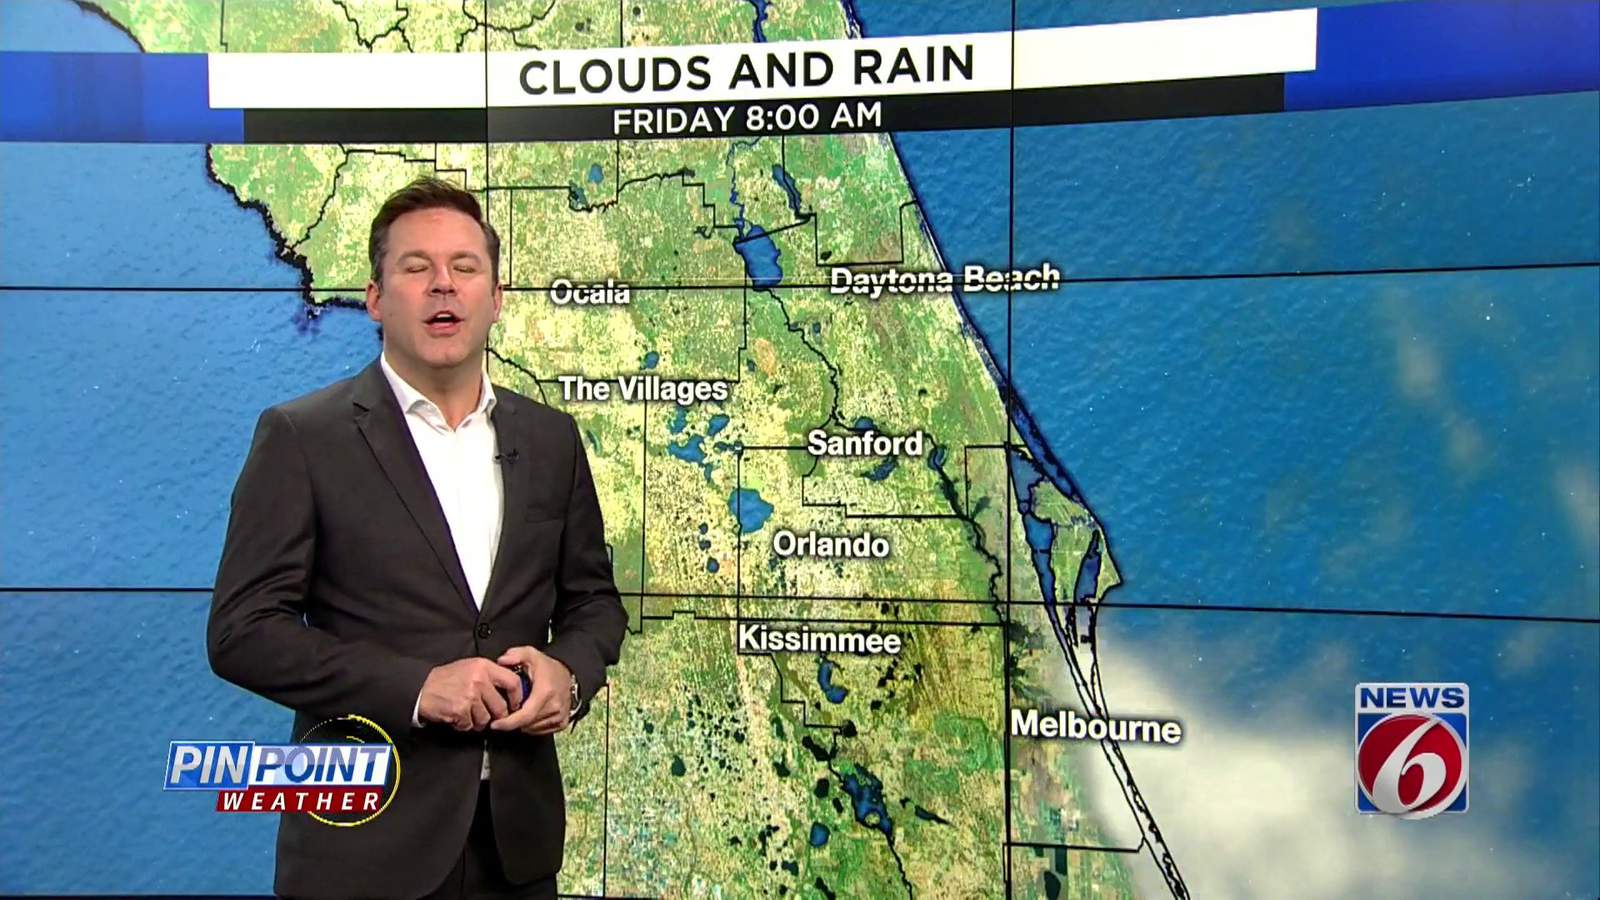 Central Florida’s Black Friday forecast: Priceless